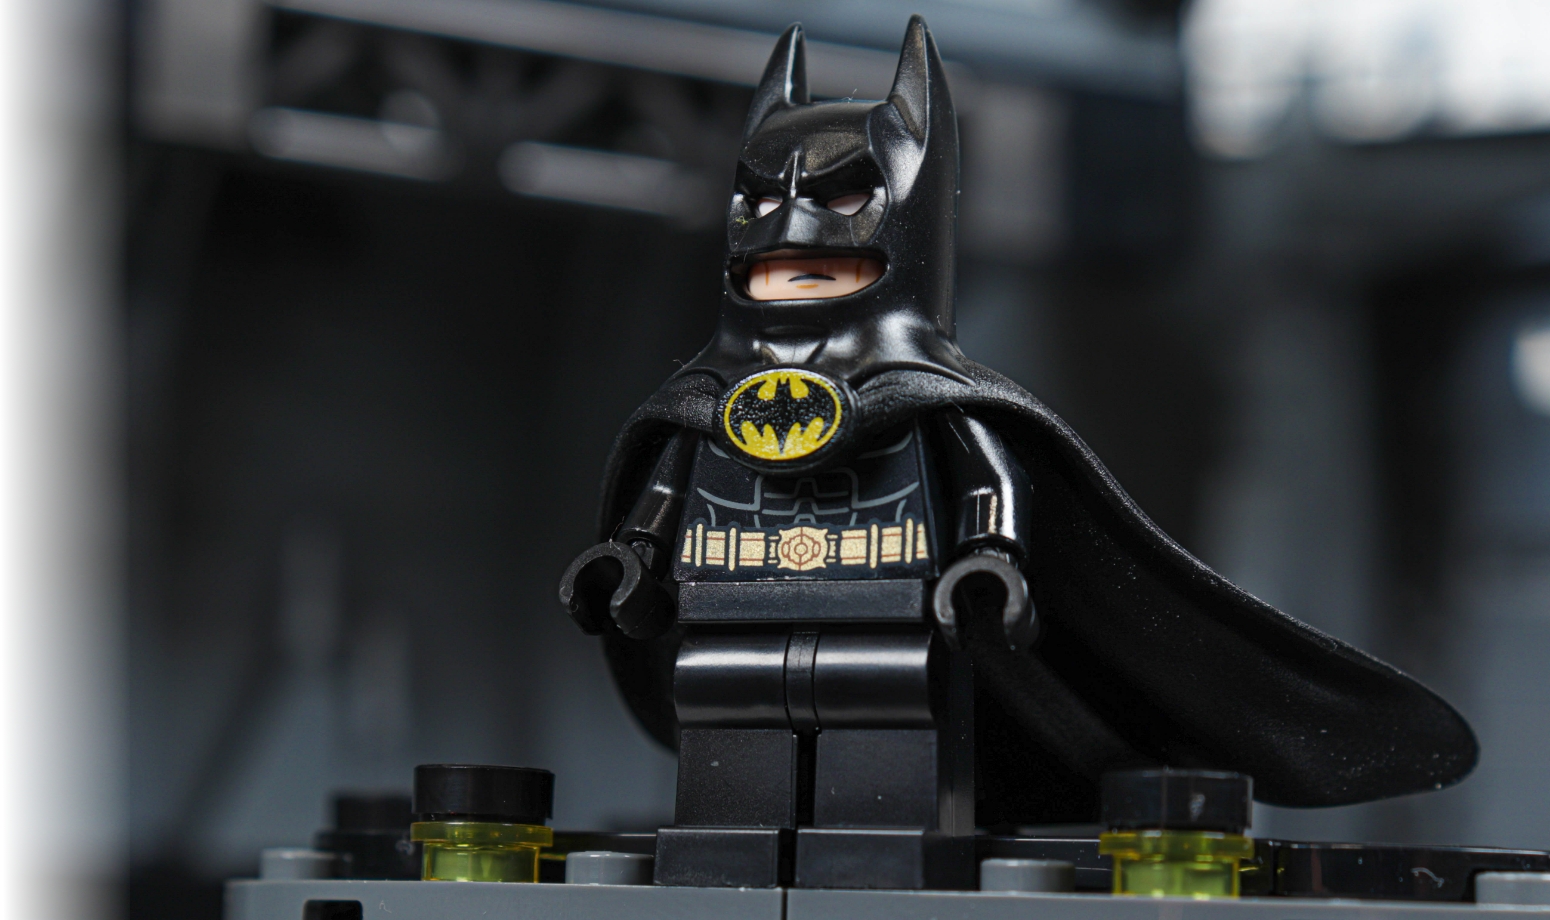 LEGO Batcave Shadow Box Gives DC Fans An Adults Set